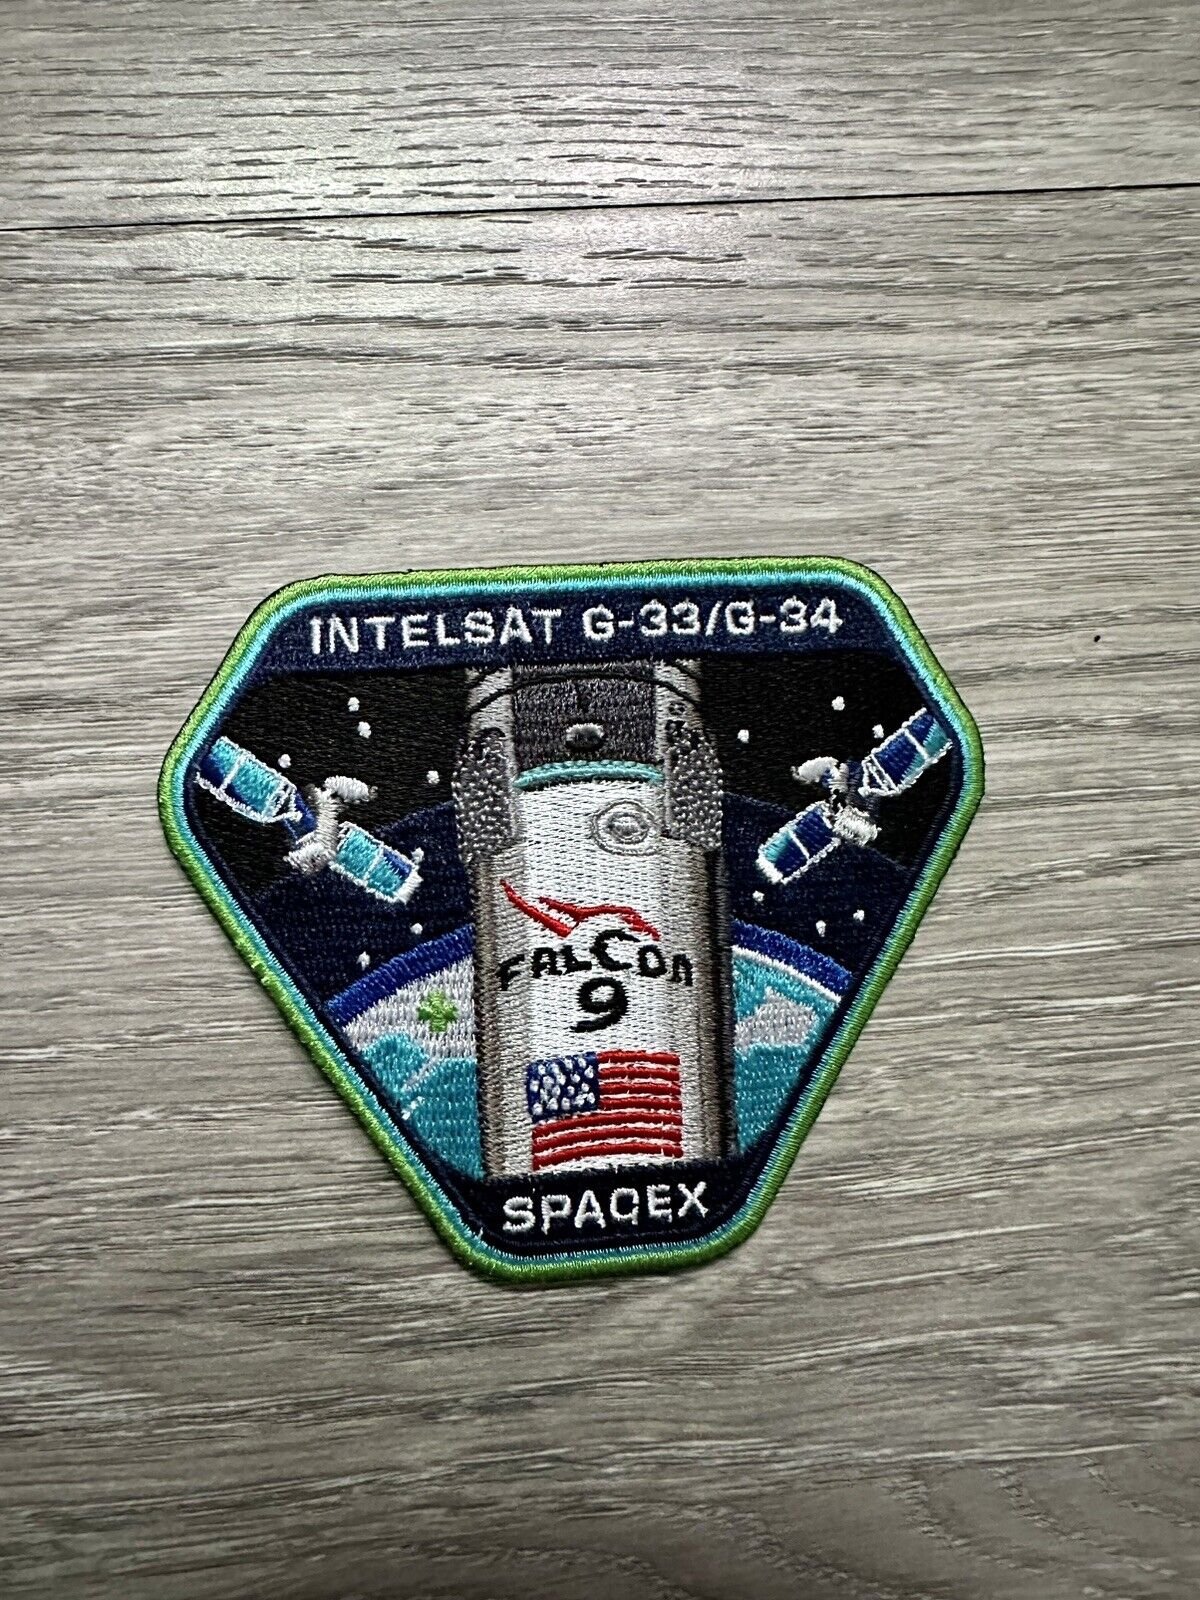 OrIginal SPACEX  FALCON 9 INTELSAT MISSION PATCH - SPACE PATCH NASA 2022